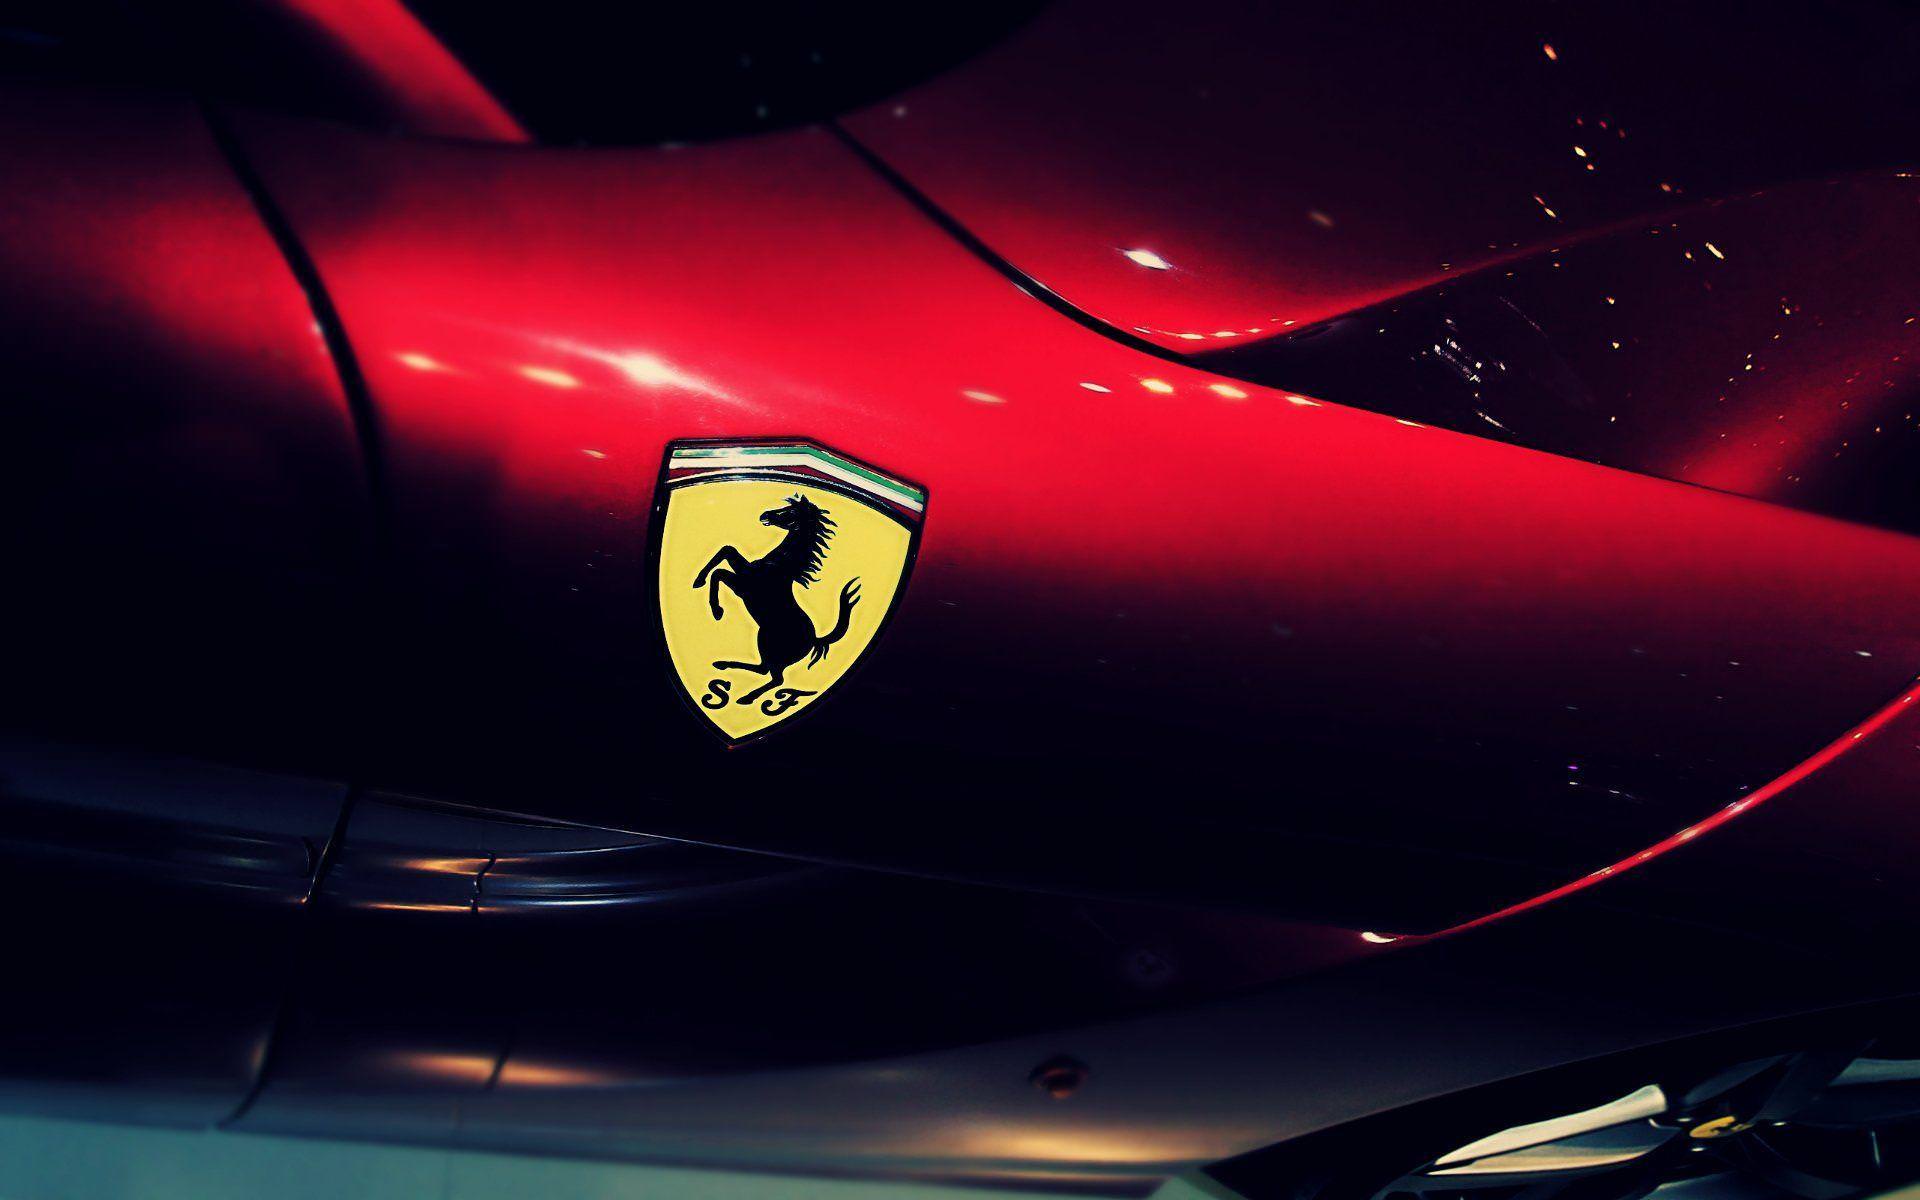 Ferrari rear red fund logo HD wallpaper download